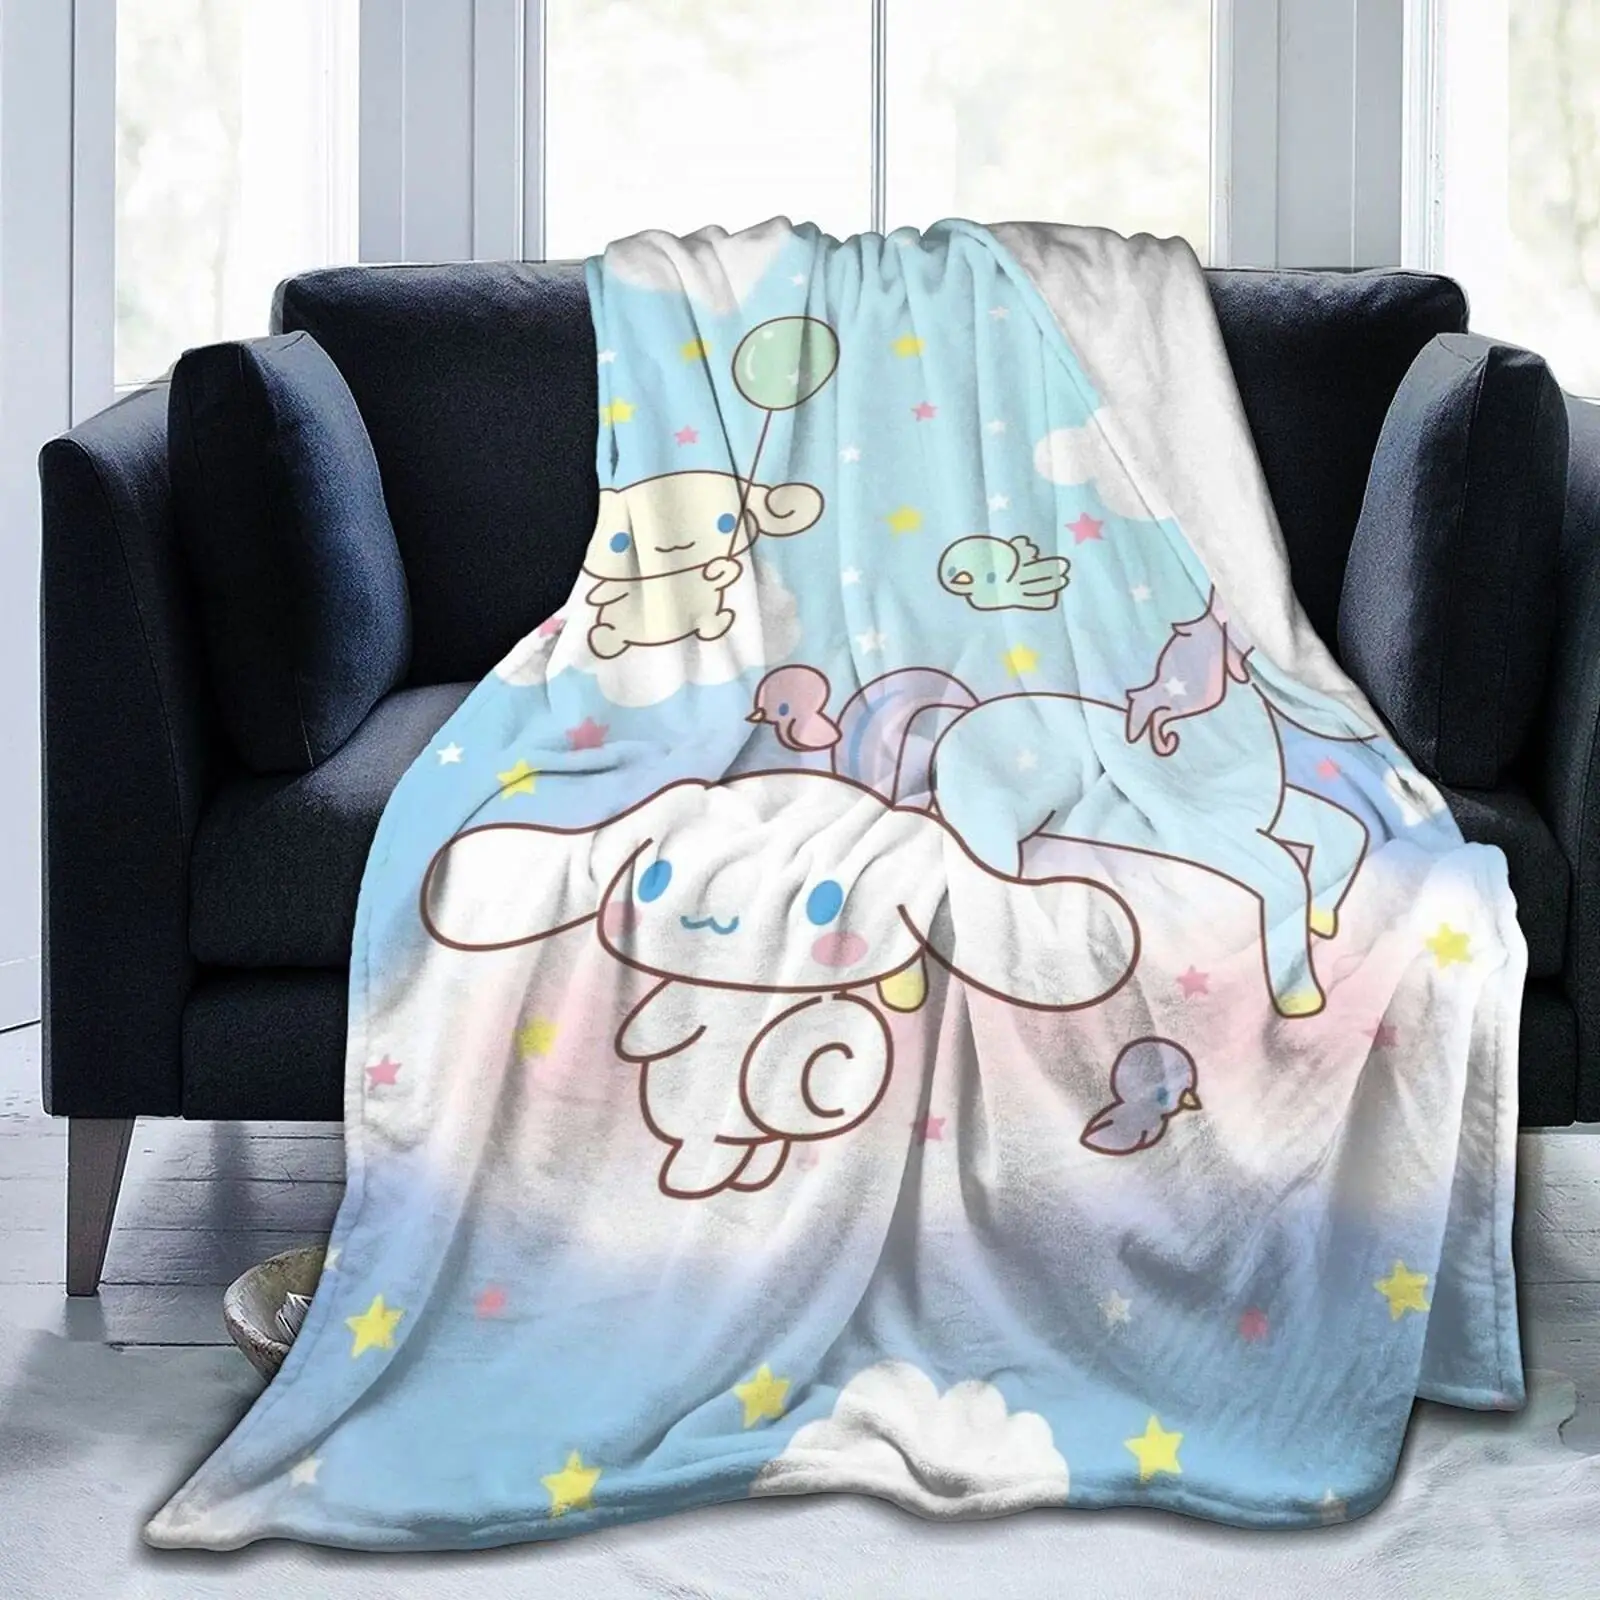 ODM OEM بطانية قط سيراميكي مطبوع عليها شخصيات كرتونية صوف مرجاني بطانية كورومي بطانية أريكة لغرفة النوم